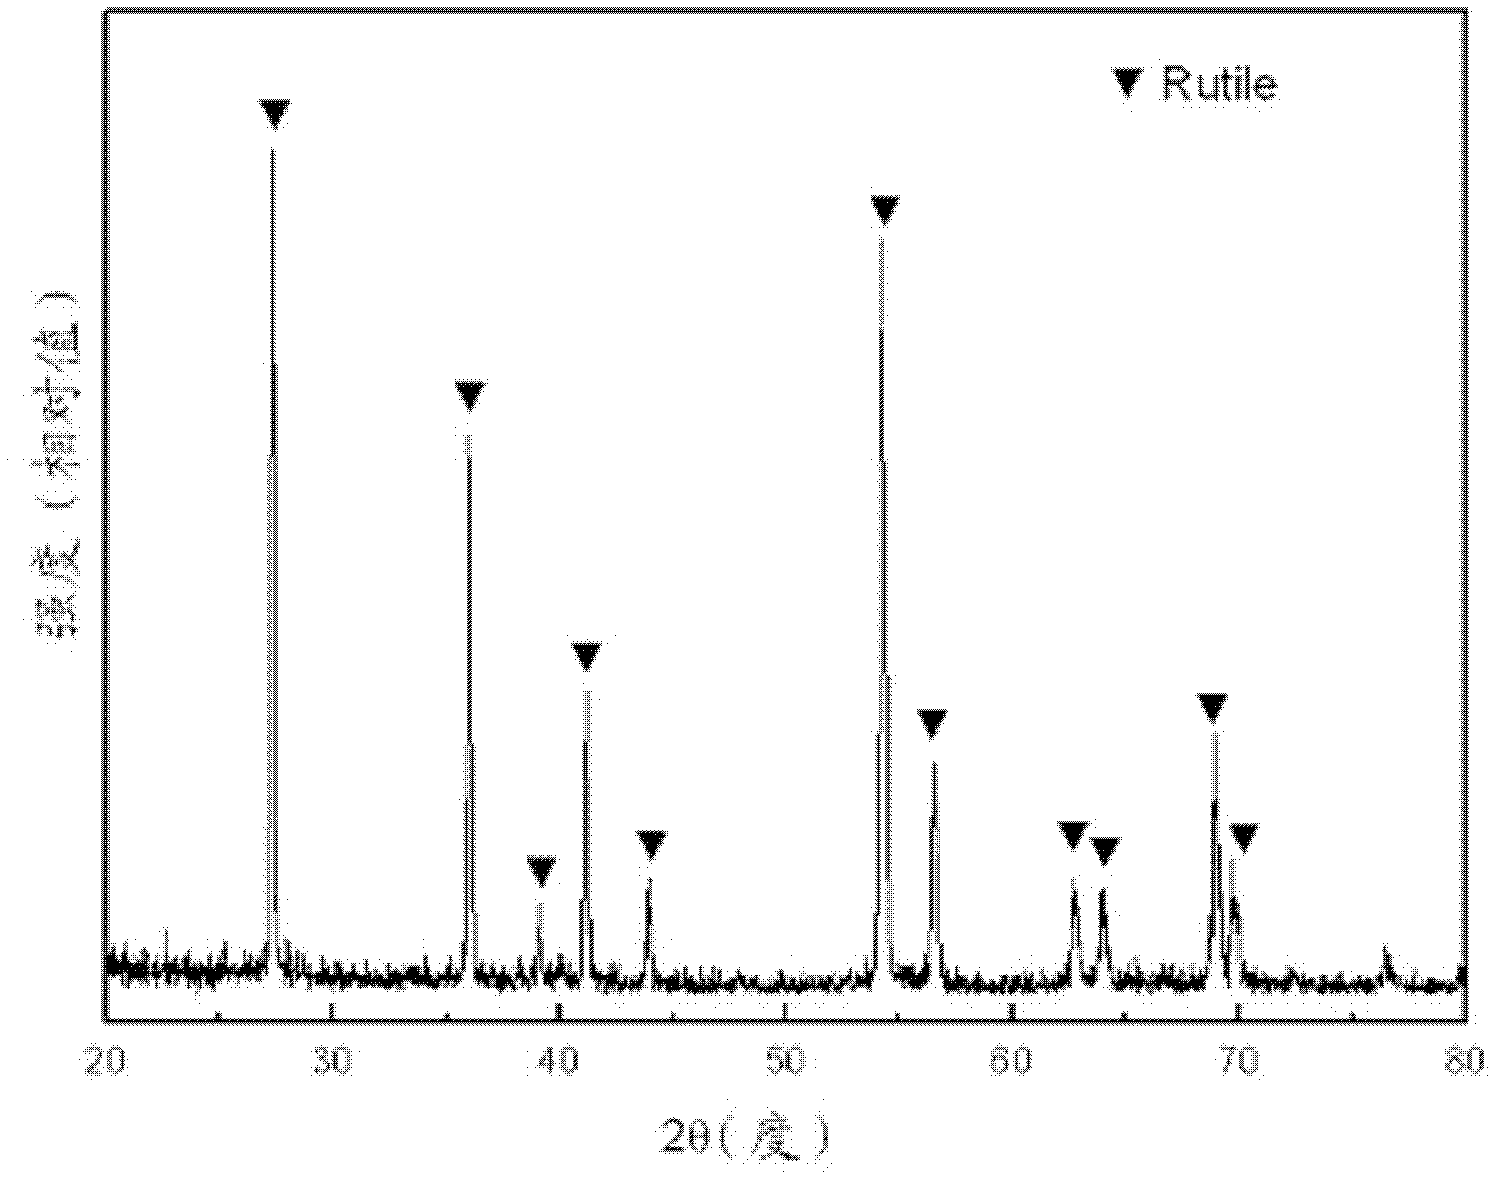 Microarc oxidation preparation method of pure rutile phase titanium dioxide electrochromism film